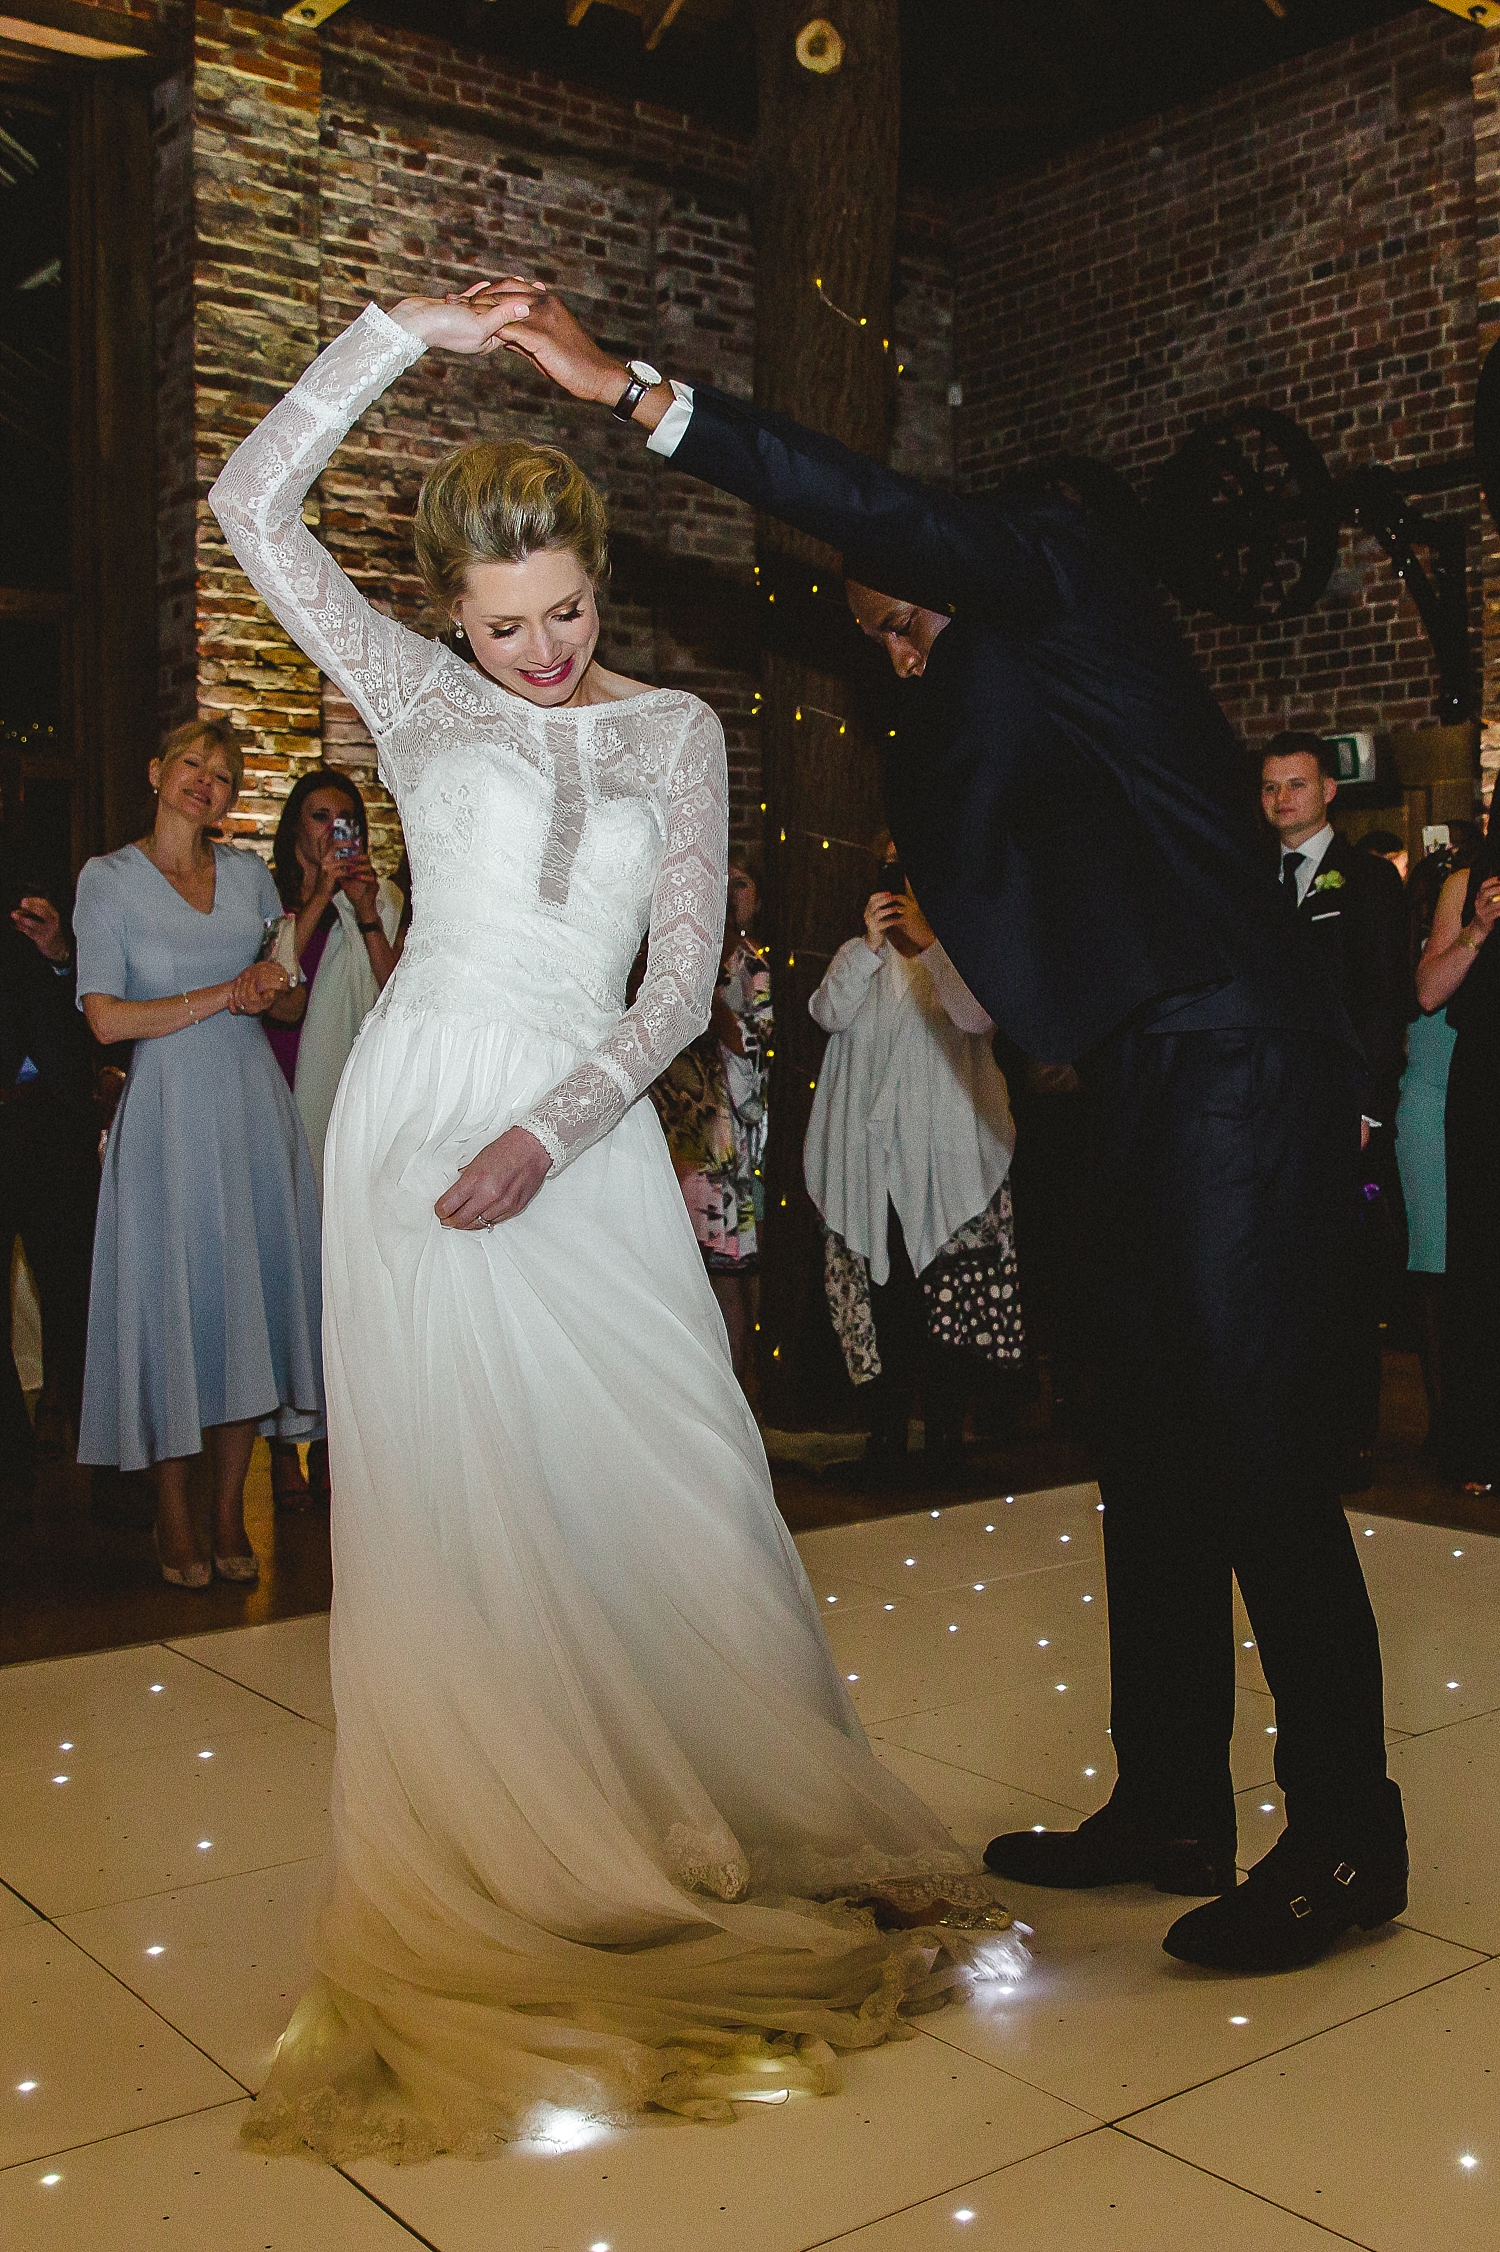 Gaynes Park Essex Wedding Photographer - First Dance